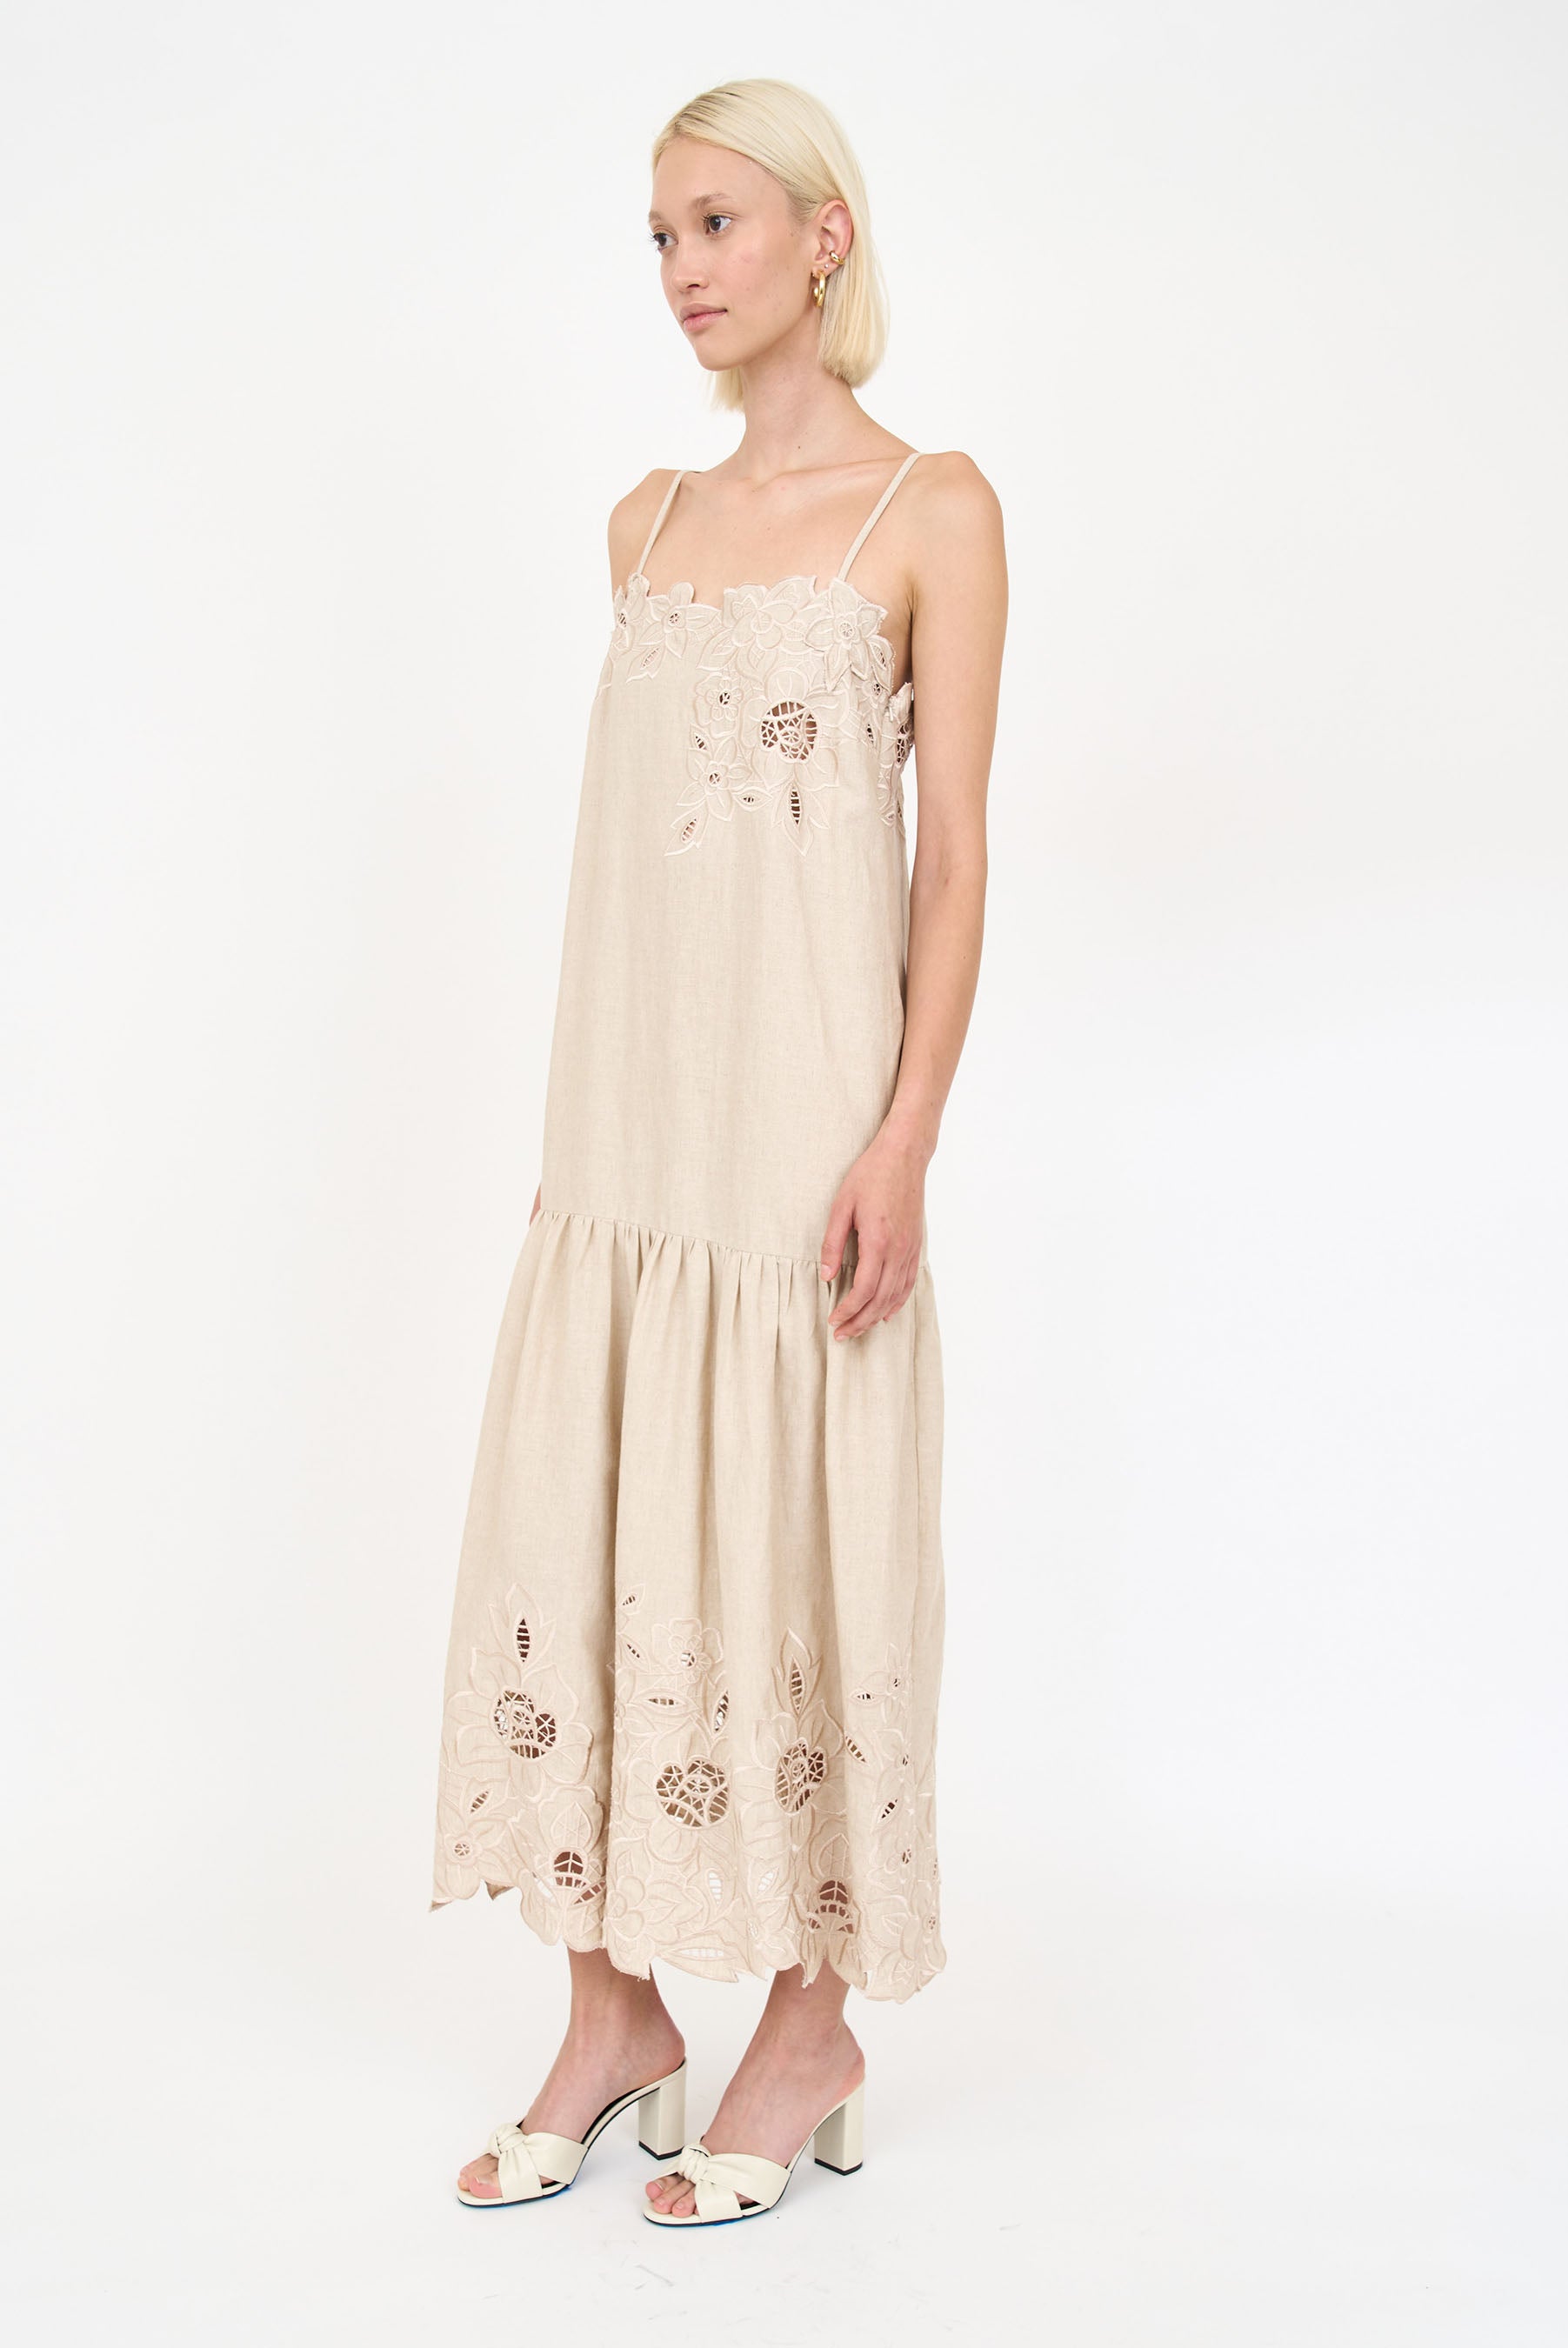 Avery Dress - Tan Embroidery